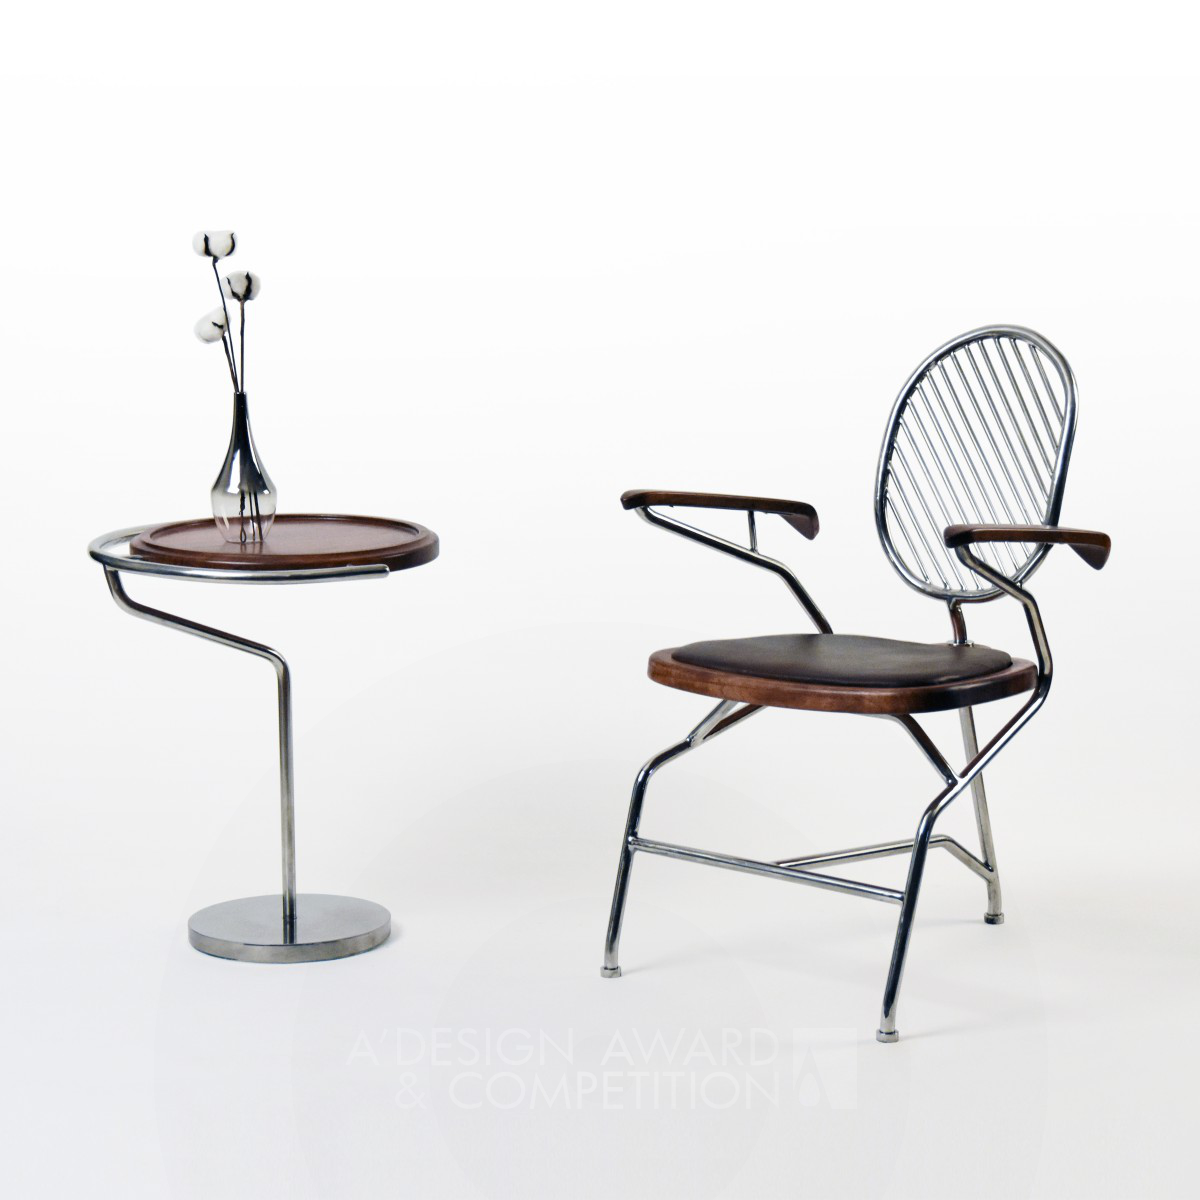 Elegance Comfortable To Use by Wei Jingye and Jiang Tianran Iron Furniture Design Award Winner 2020 